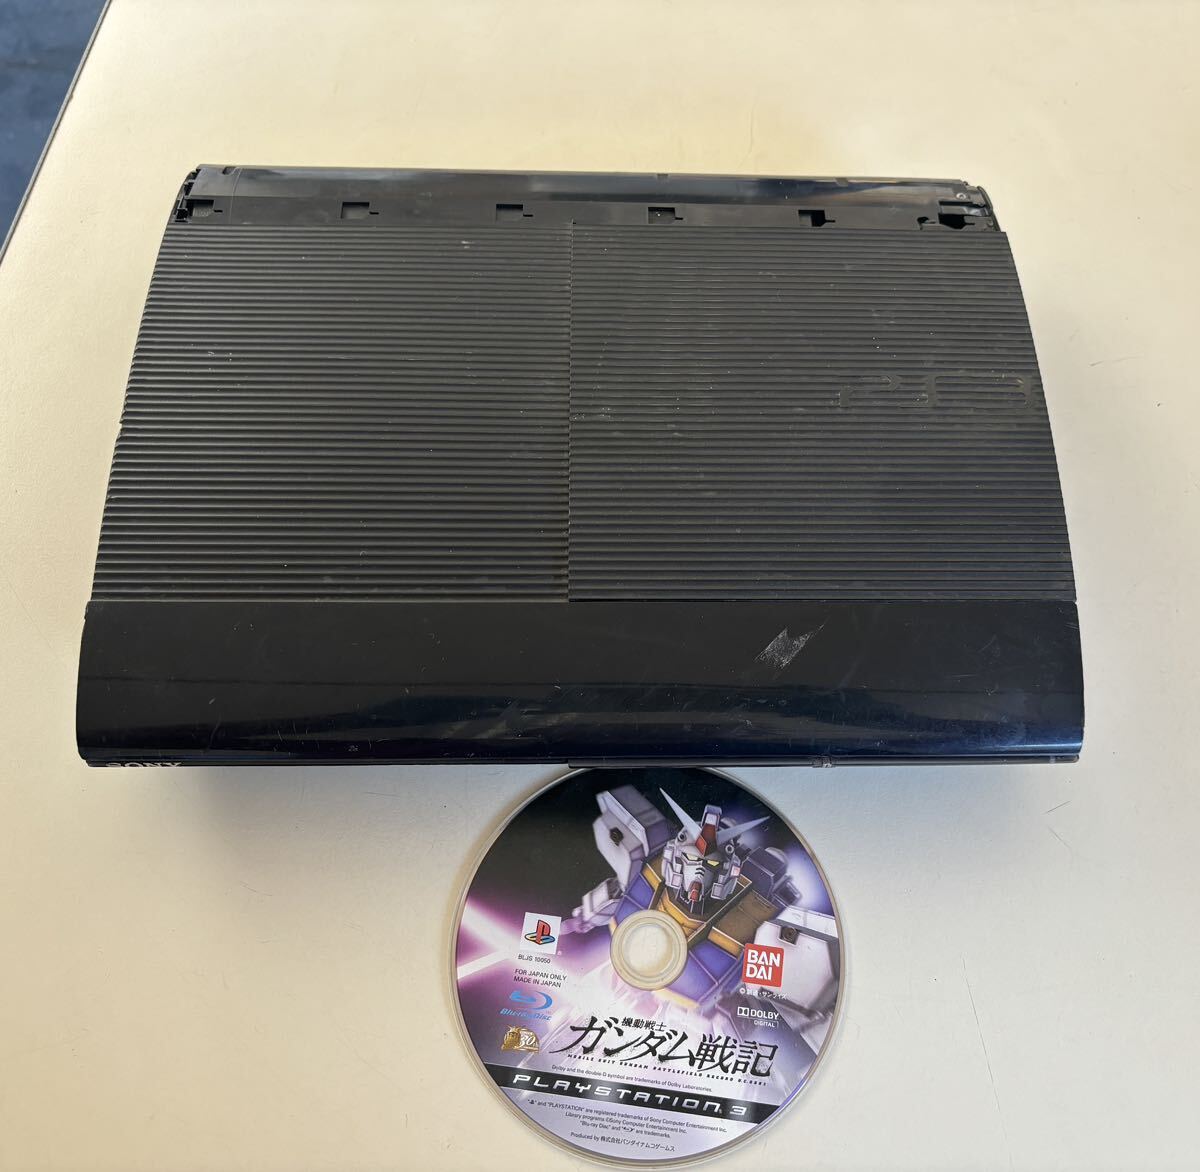 SONYソニー CECH-4200B PS3 プレイステーション3 本体 250GB チャコールブラック ソフトつき、ジャンク品の画像1